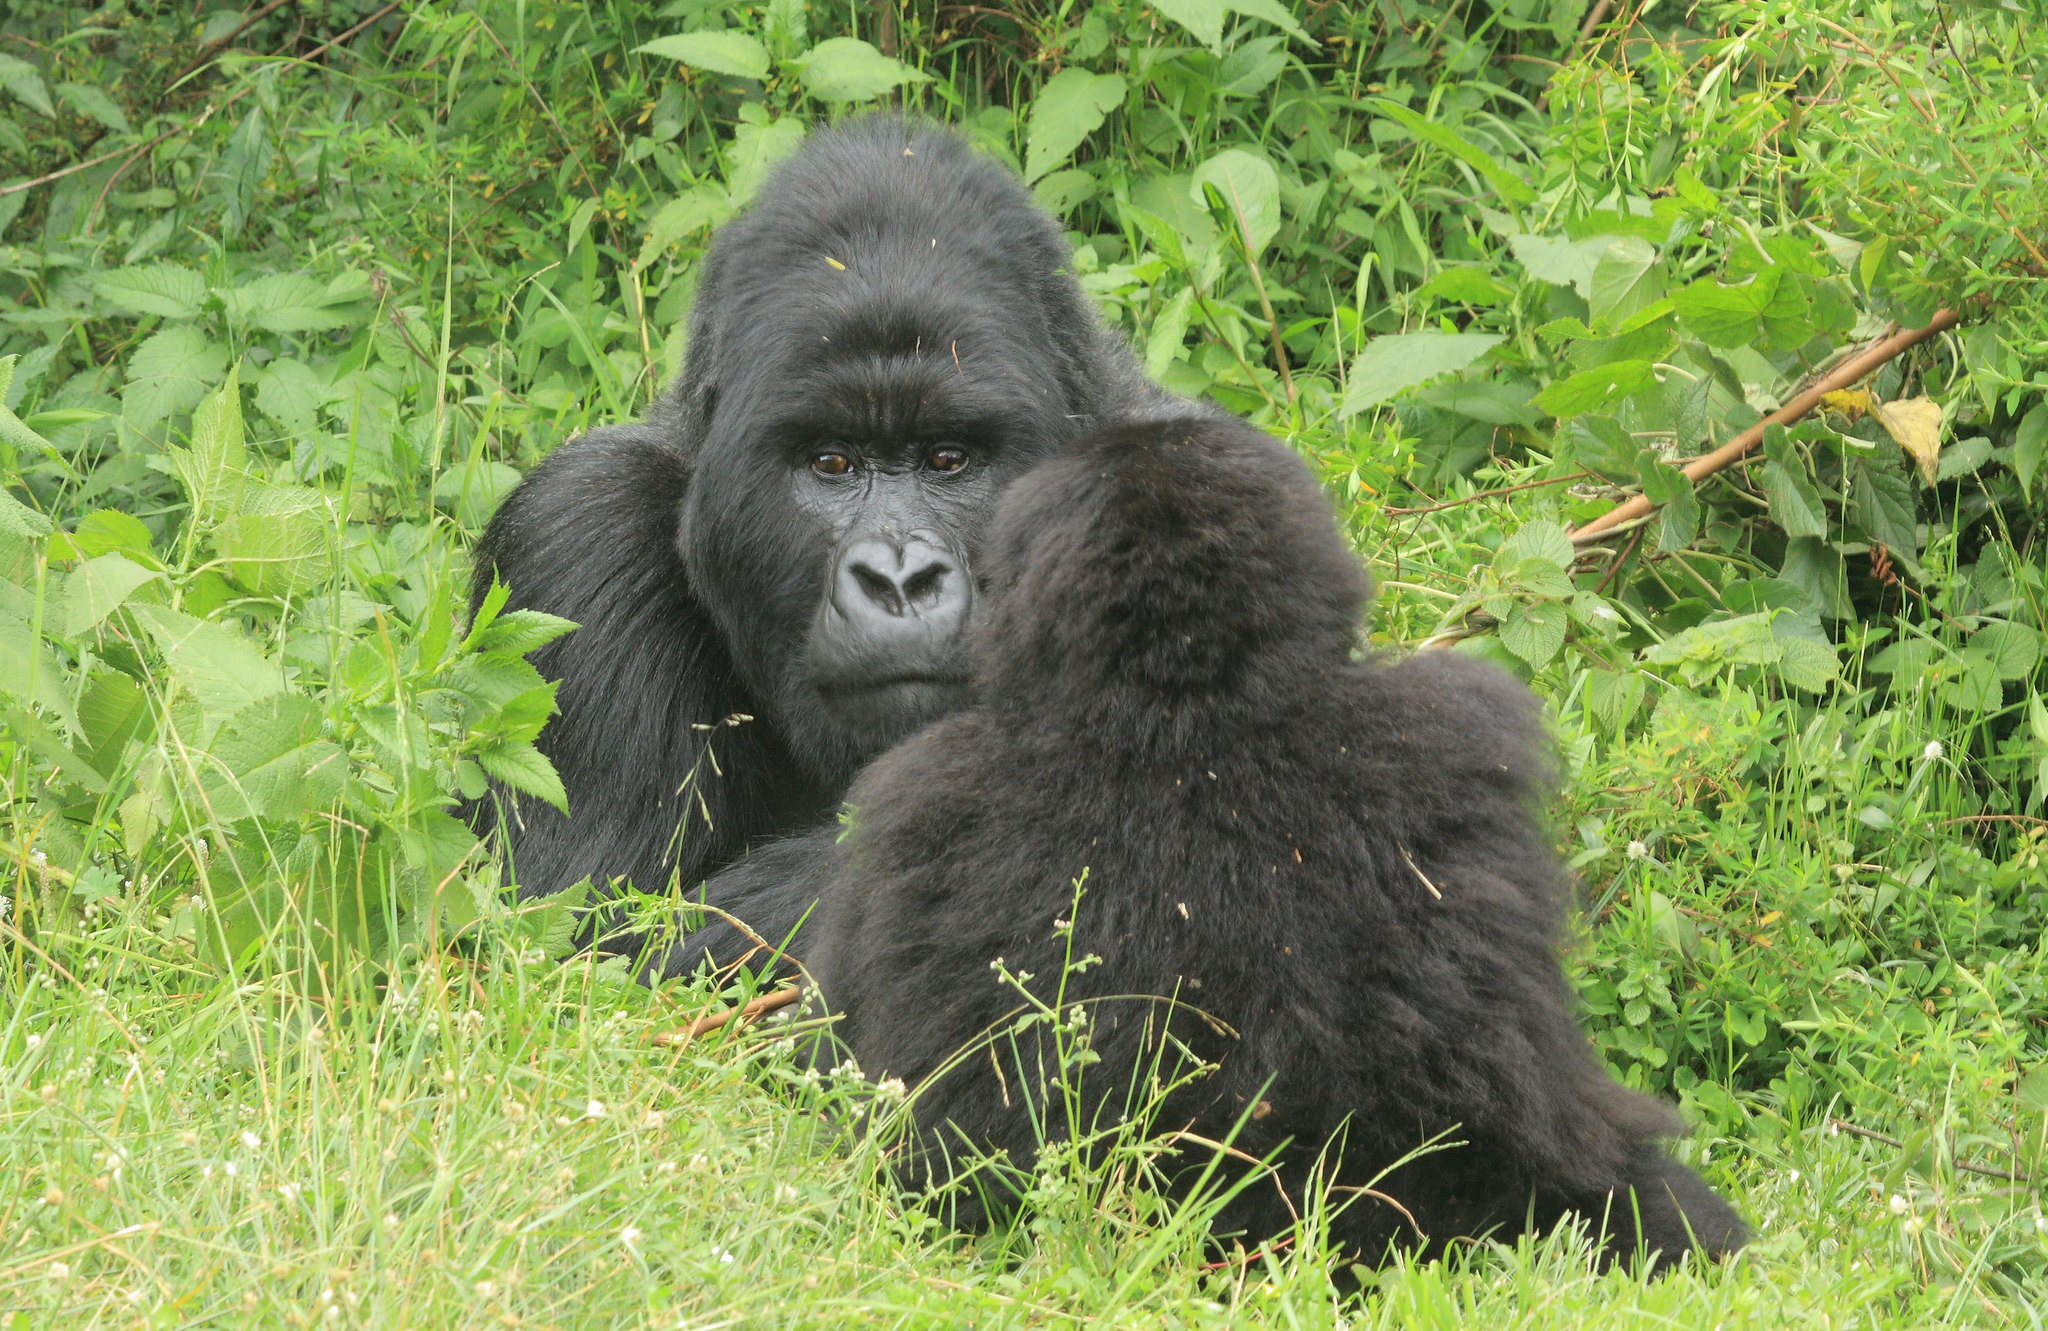 How difficult is Gorilla Trekking in Rwanda?